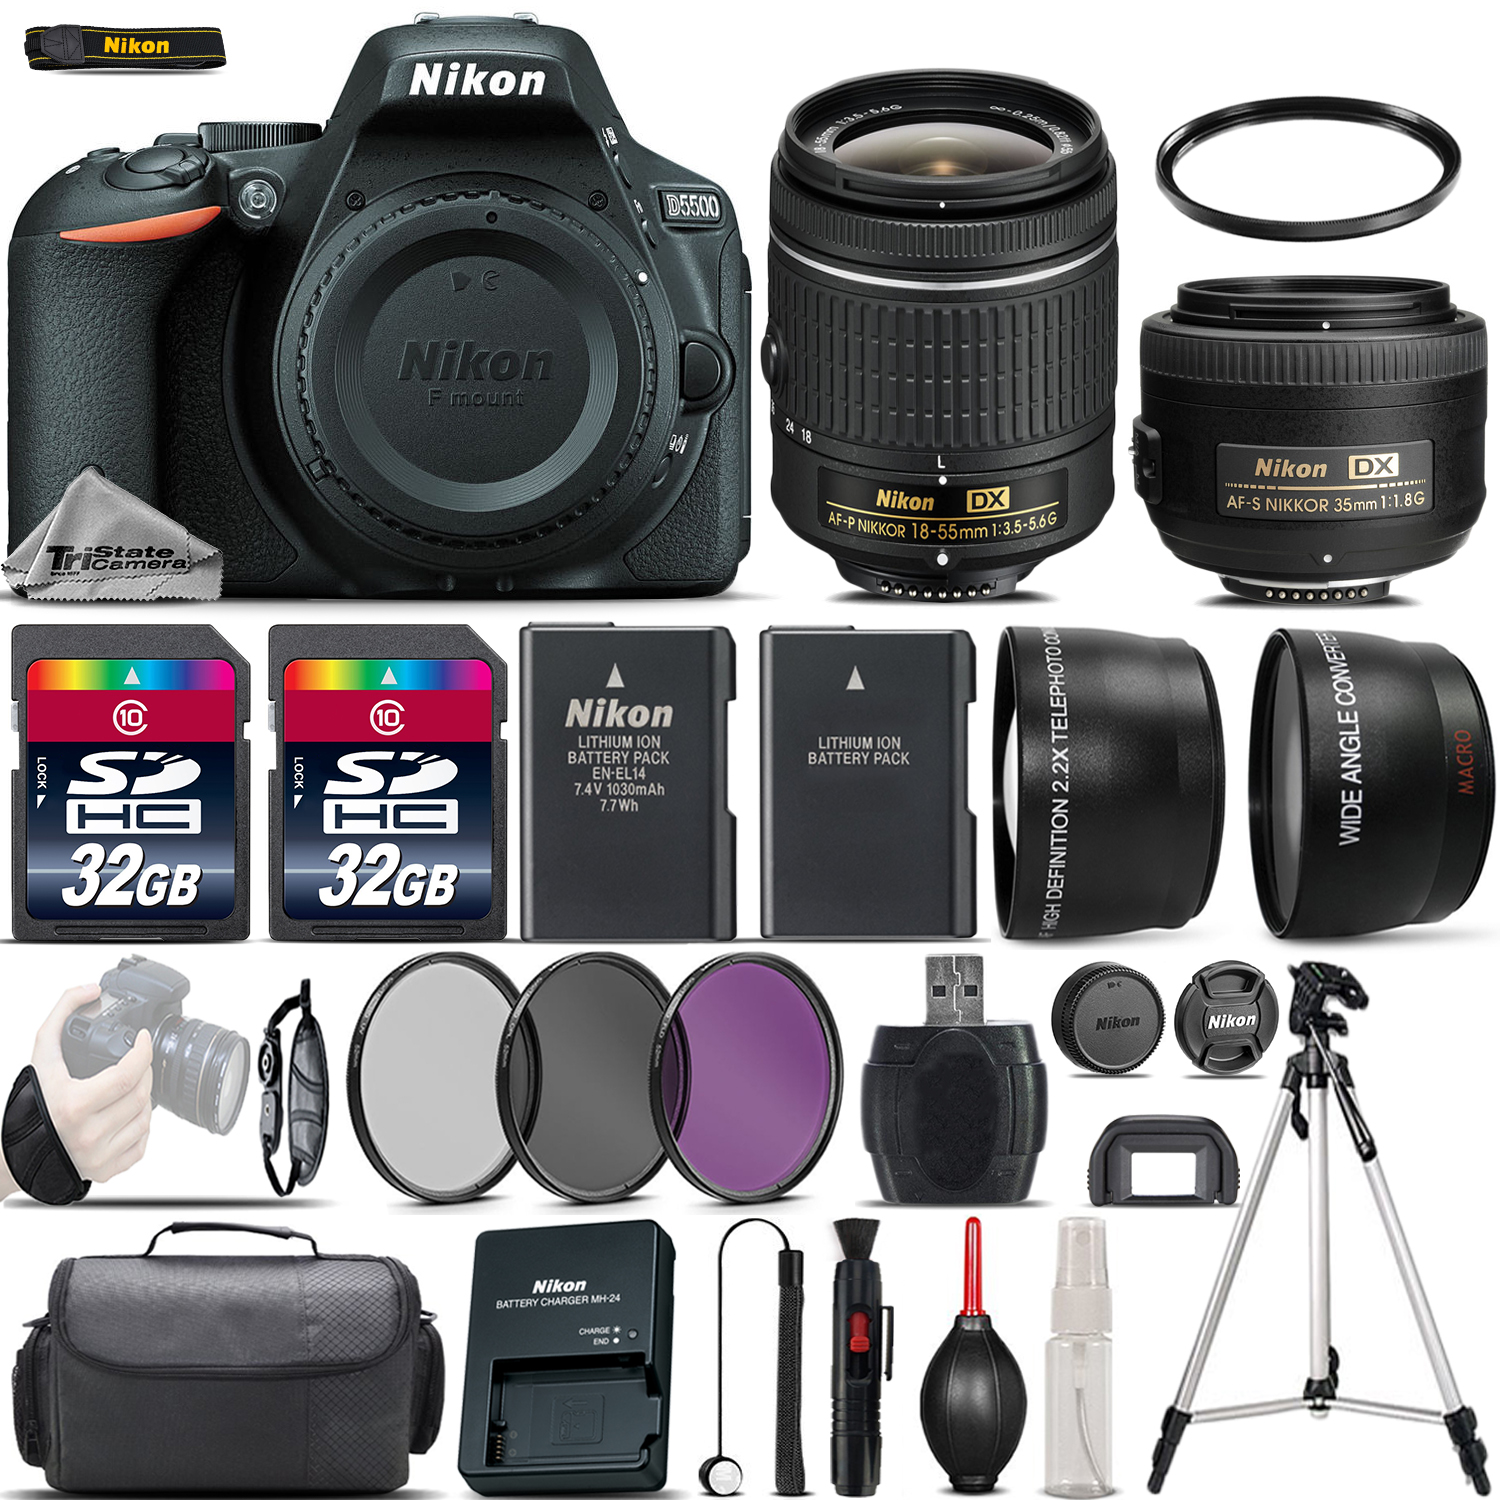 D5500 Digital SLR Camera + 18-55mm VR + 35mm 1.8G Lens + 64GB - 4 Lens Kit *FREE SHIPPING*